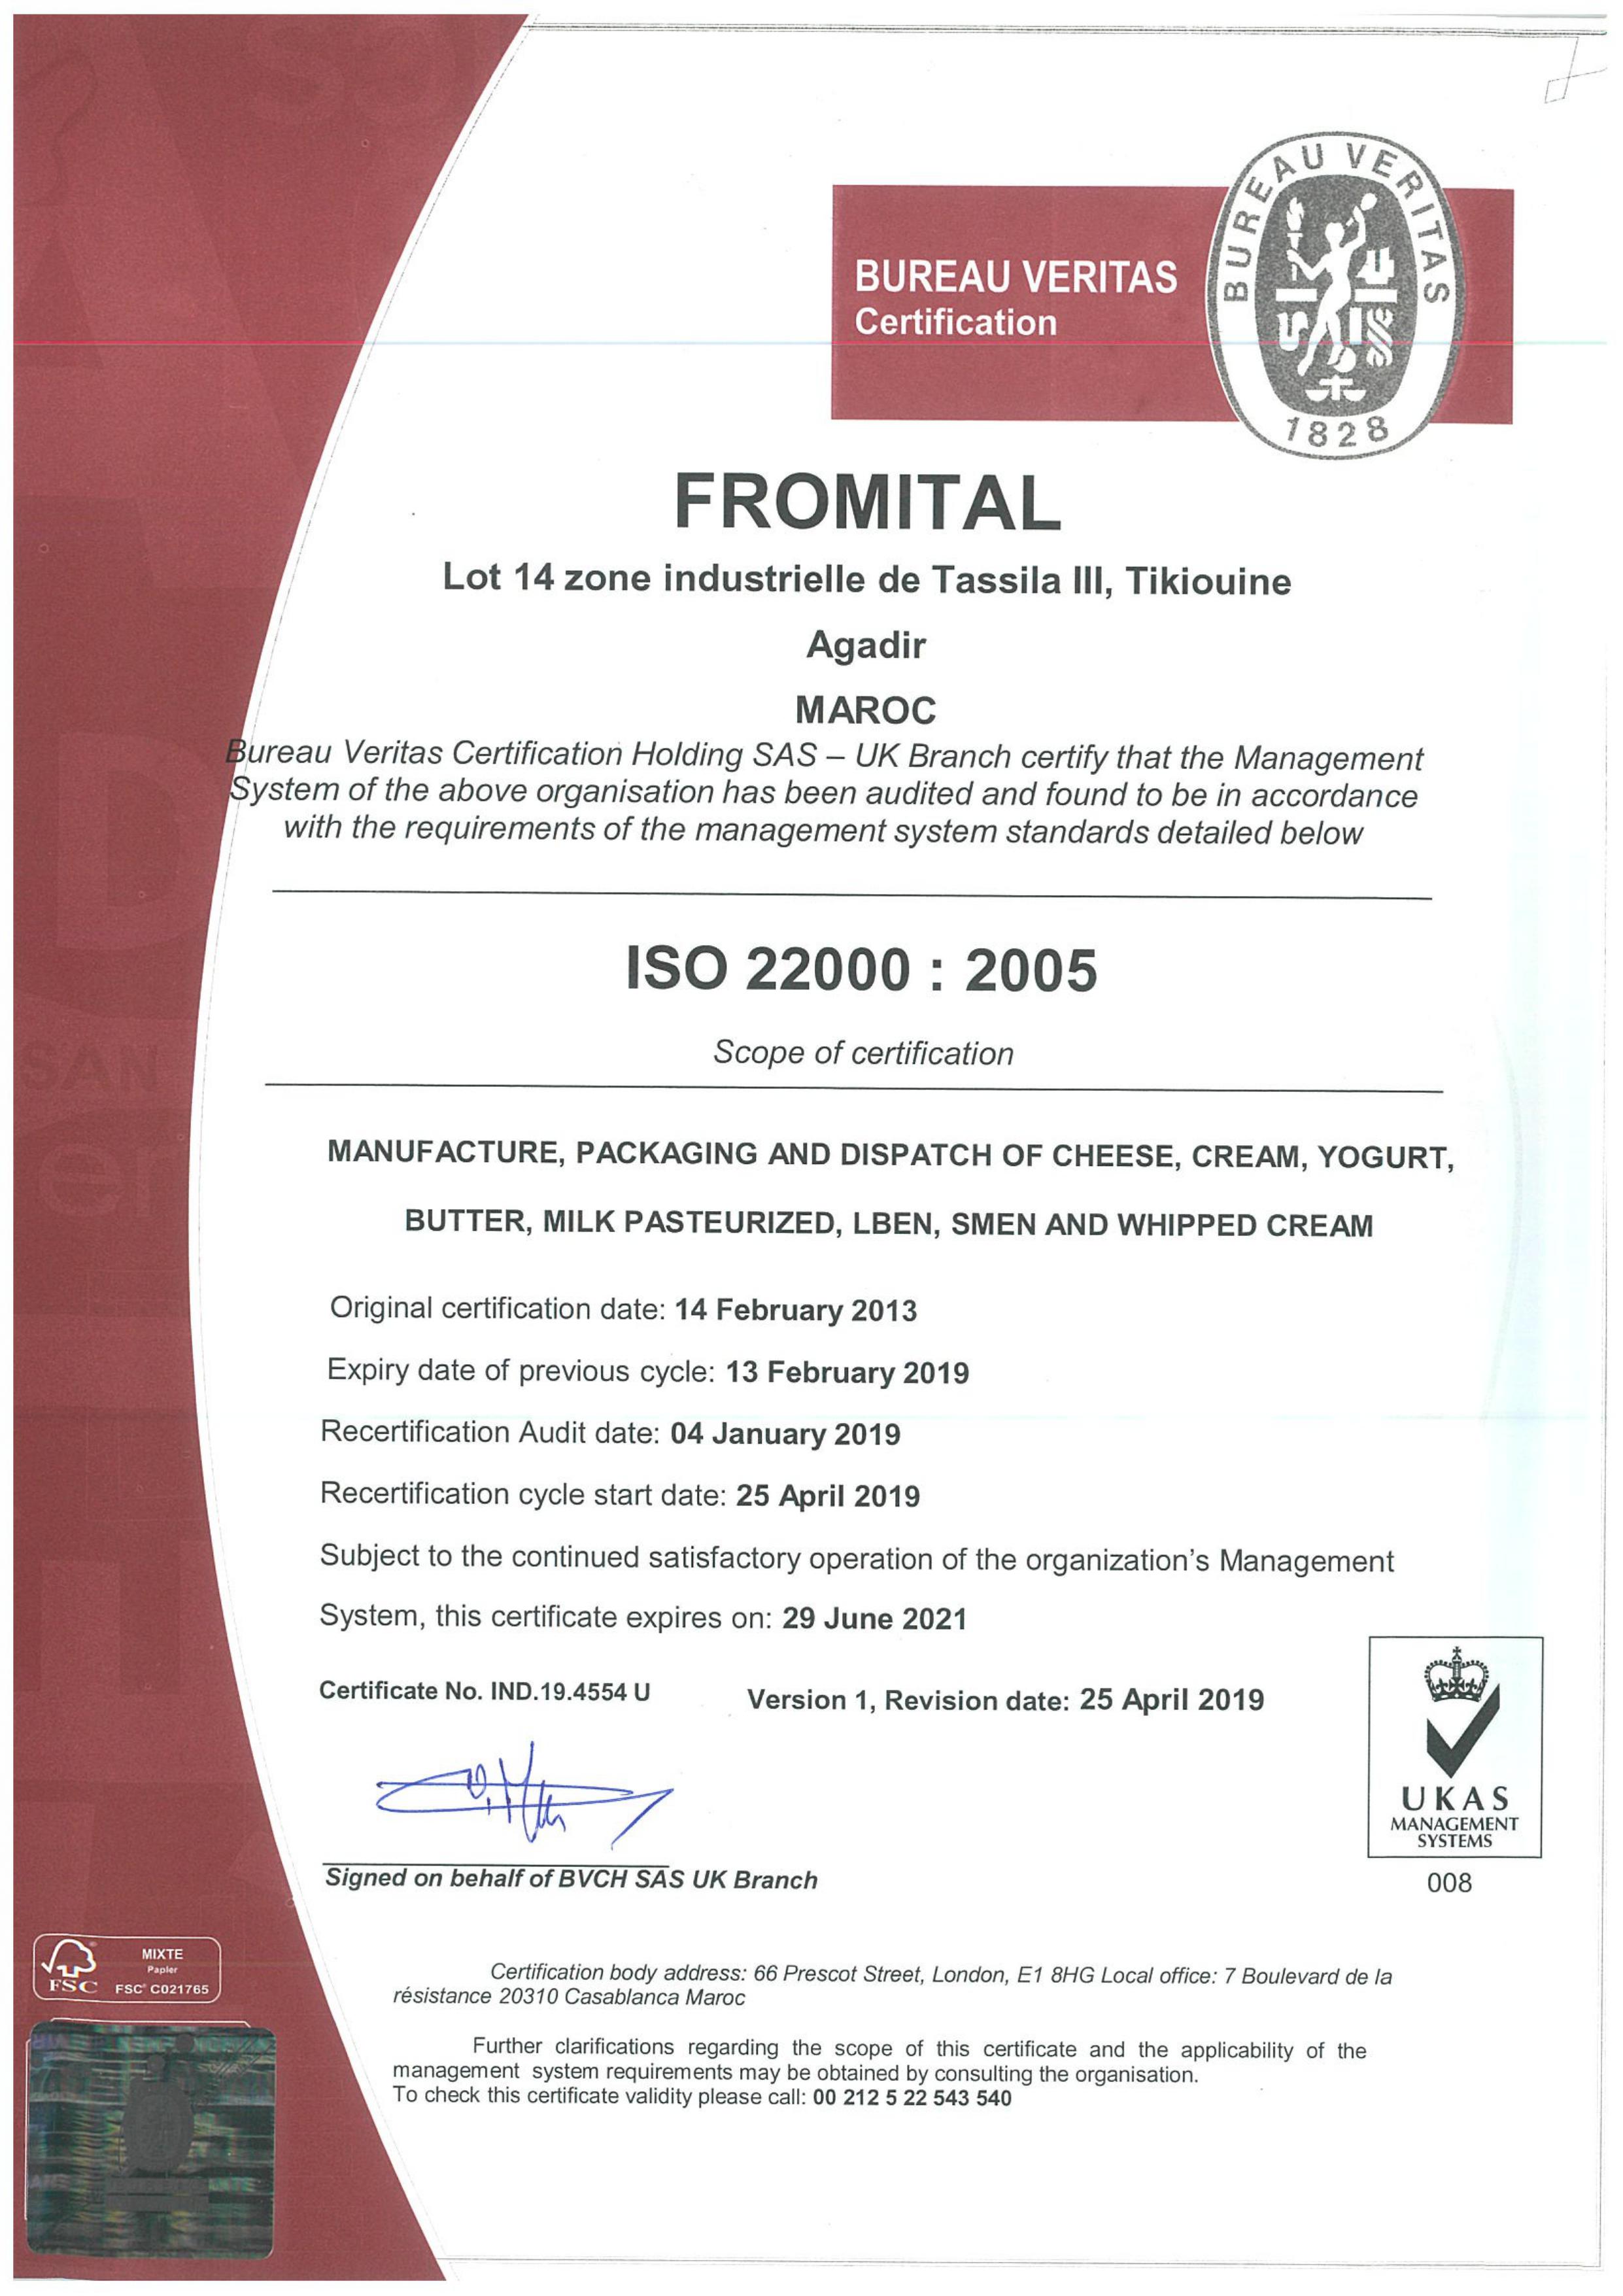 Certification 2